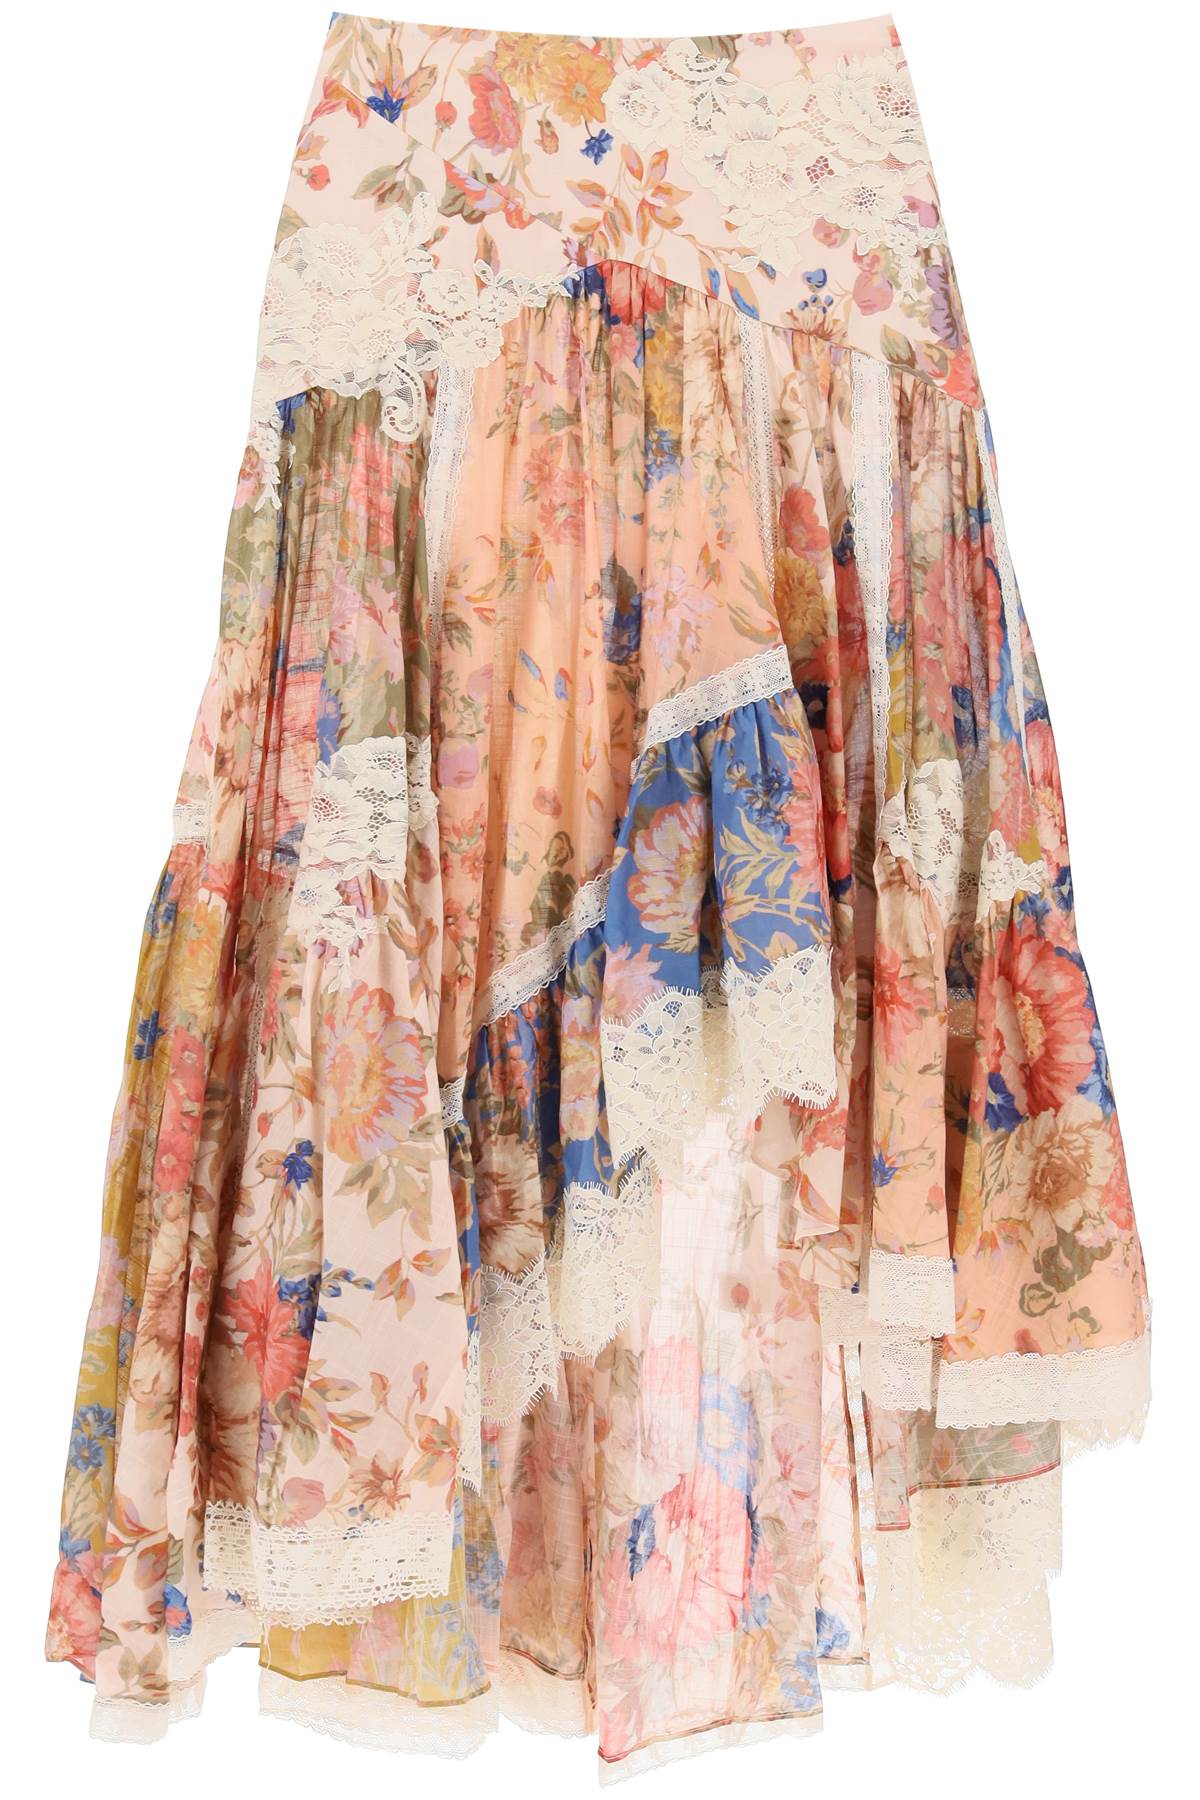 ZIMMERMANN Floral Print Cotton Midi Skirt for Women - Multicolour Asymmetric Design